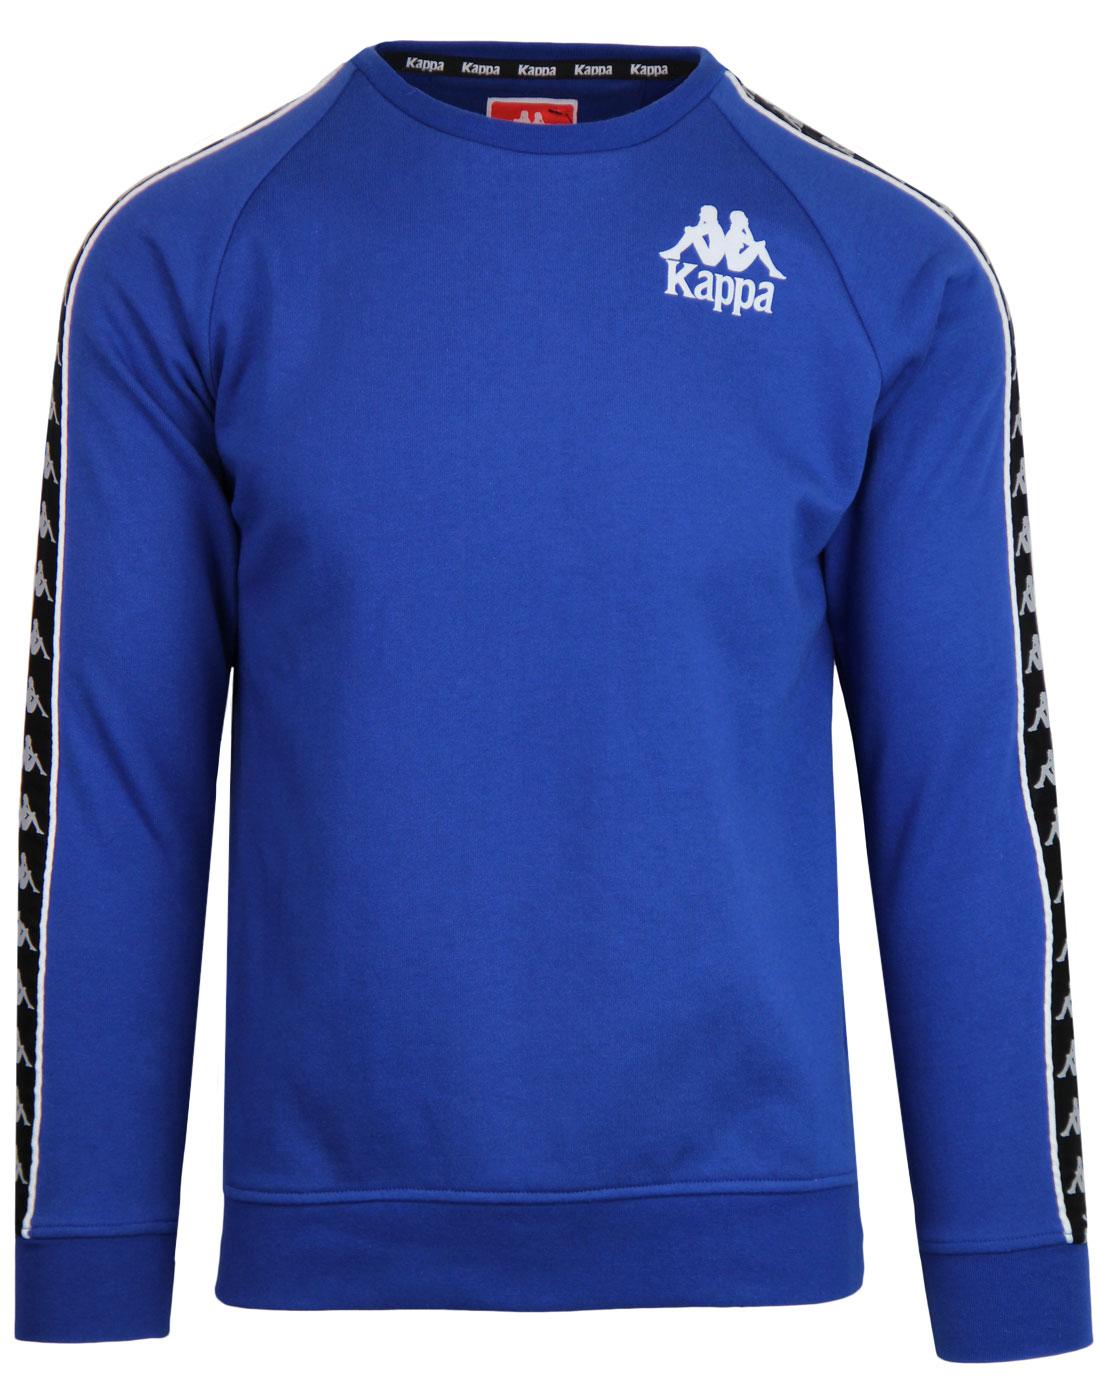 kappa sweatshirt blue